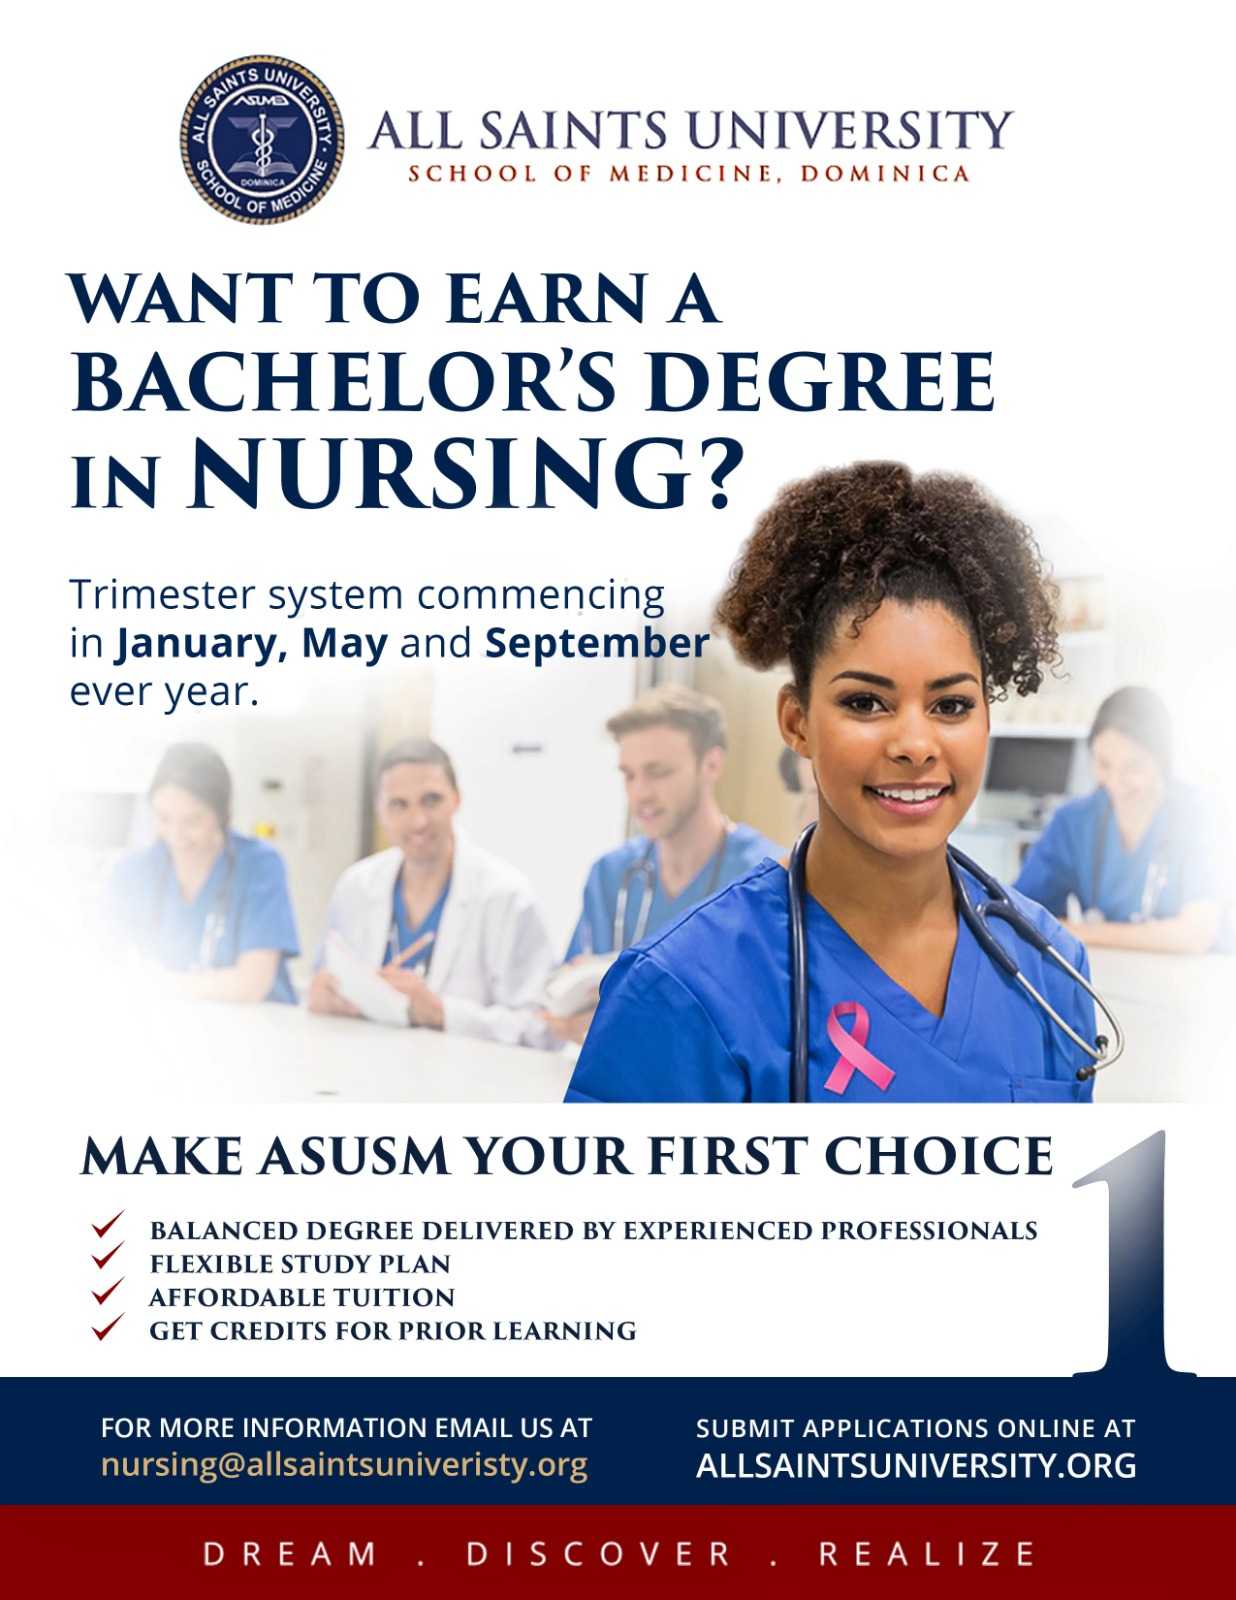 Registration for Bachelor's Degree in Nursing opens at All Saints